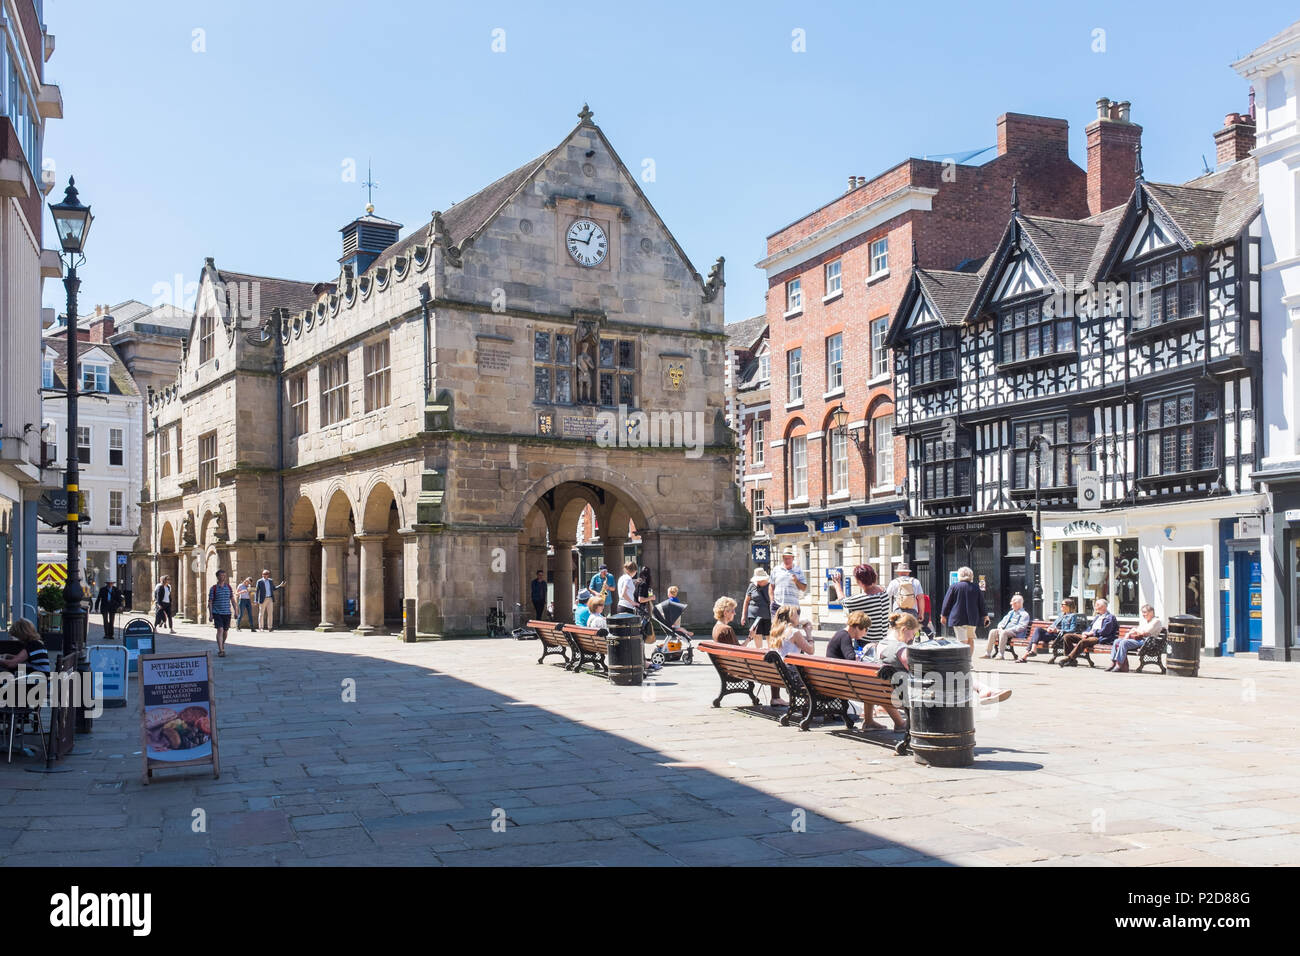 The Old Market Hall in Shrewsbury Square, Shrewsbury, Shropshire Stock Photo